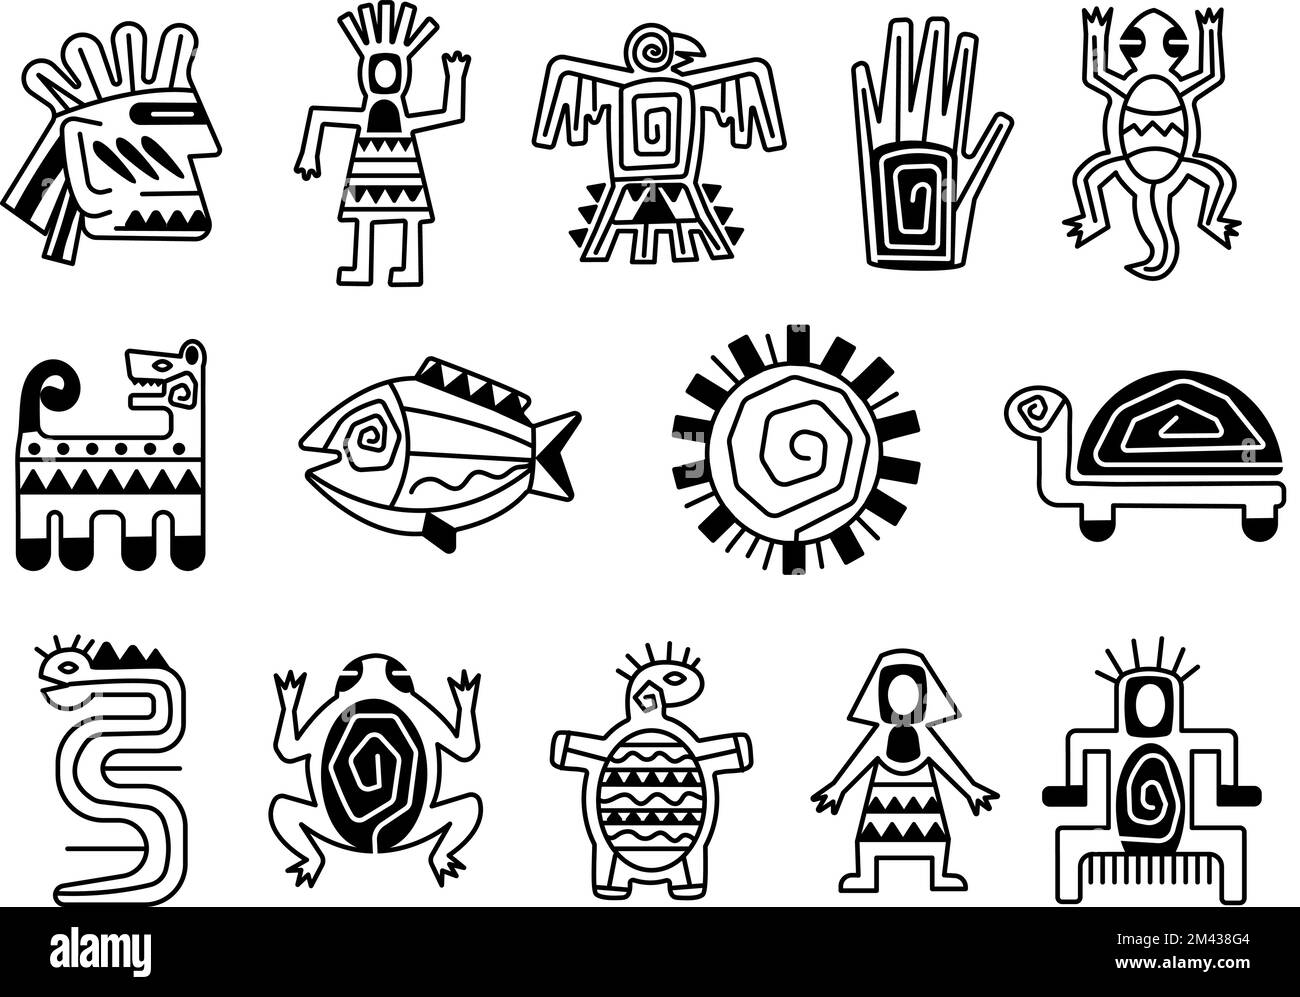 Inca mythology hi-res stock photography and images - Alamy